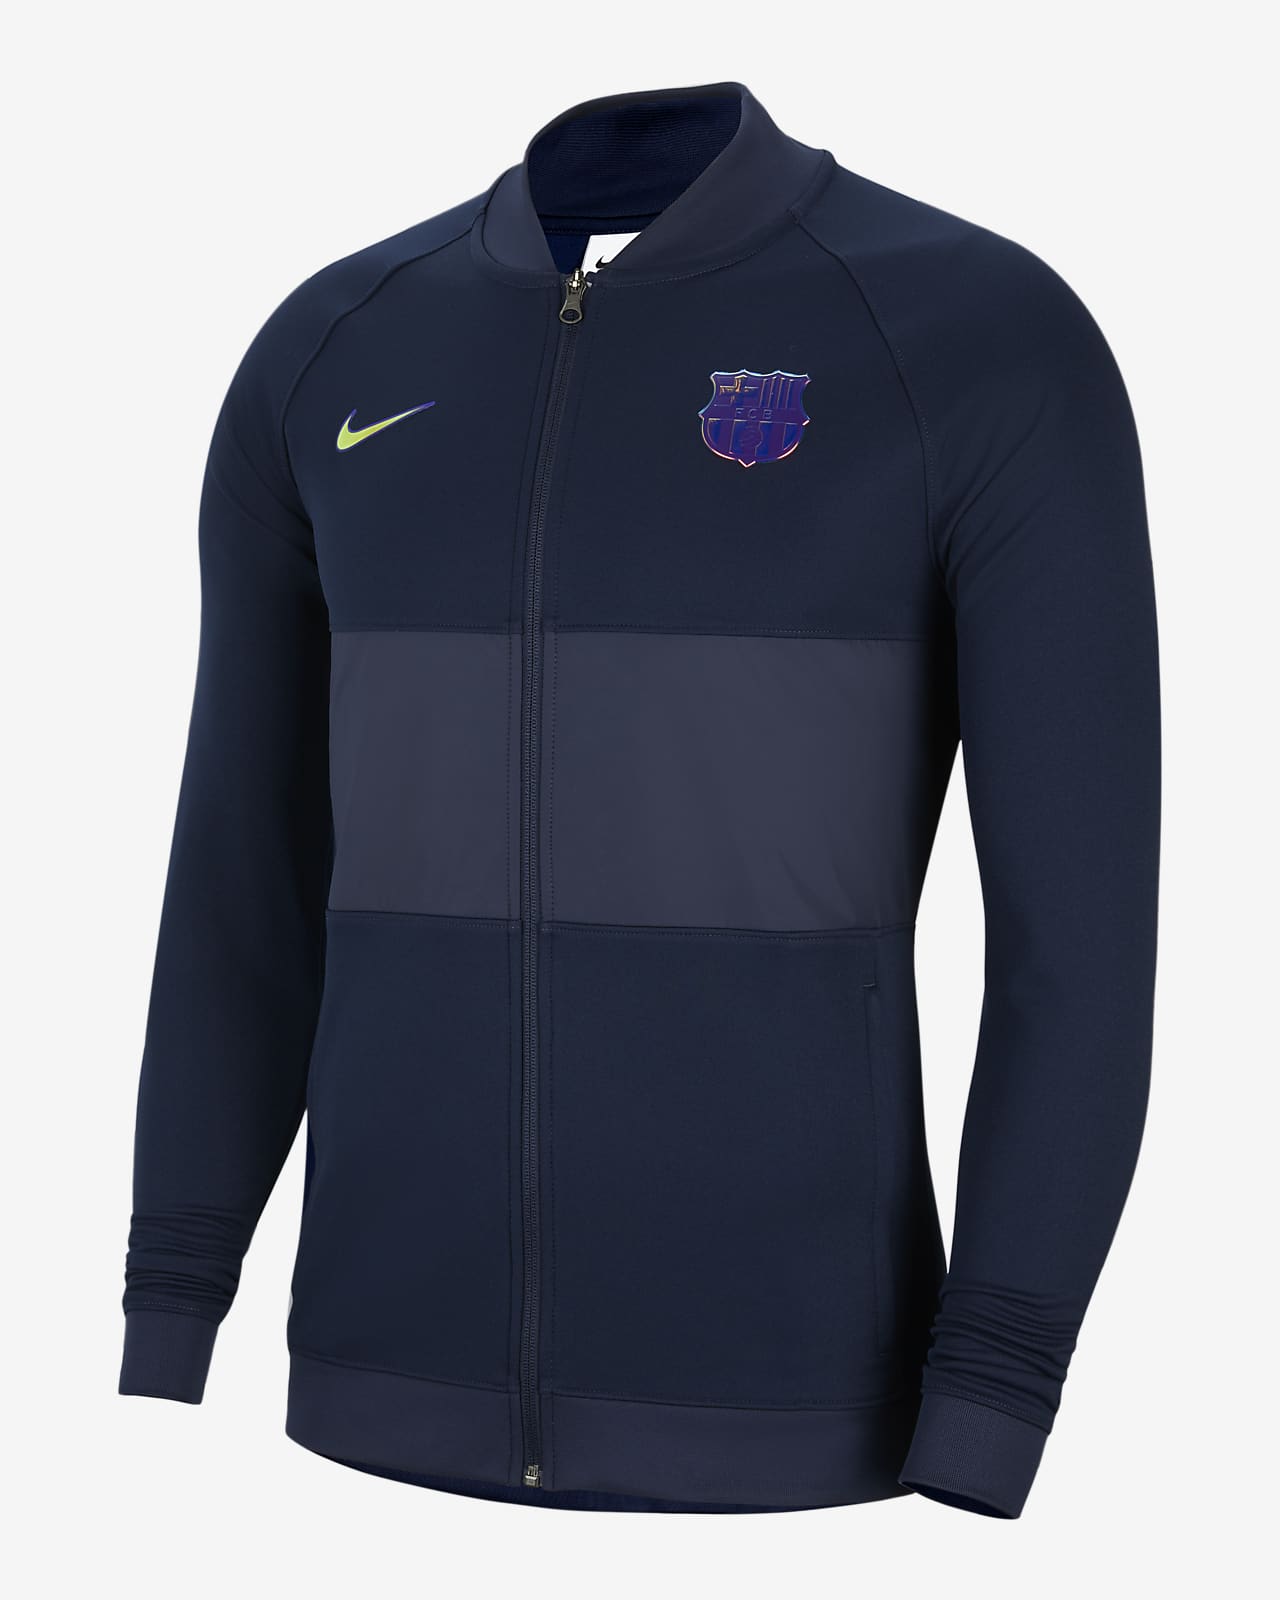 Disparates Gobernar eficaz FC Barcelona Men's Full-Zip Soccer Track Jacket. Nike.com